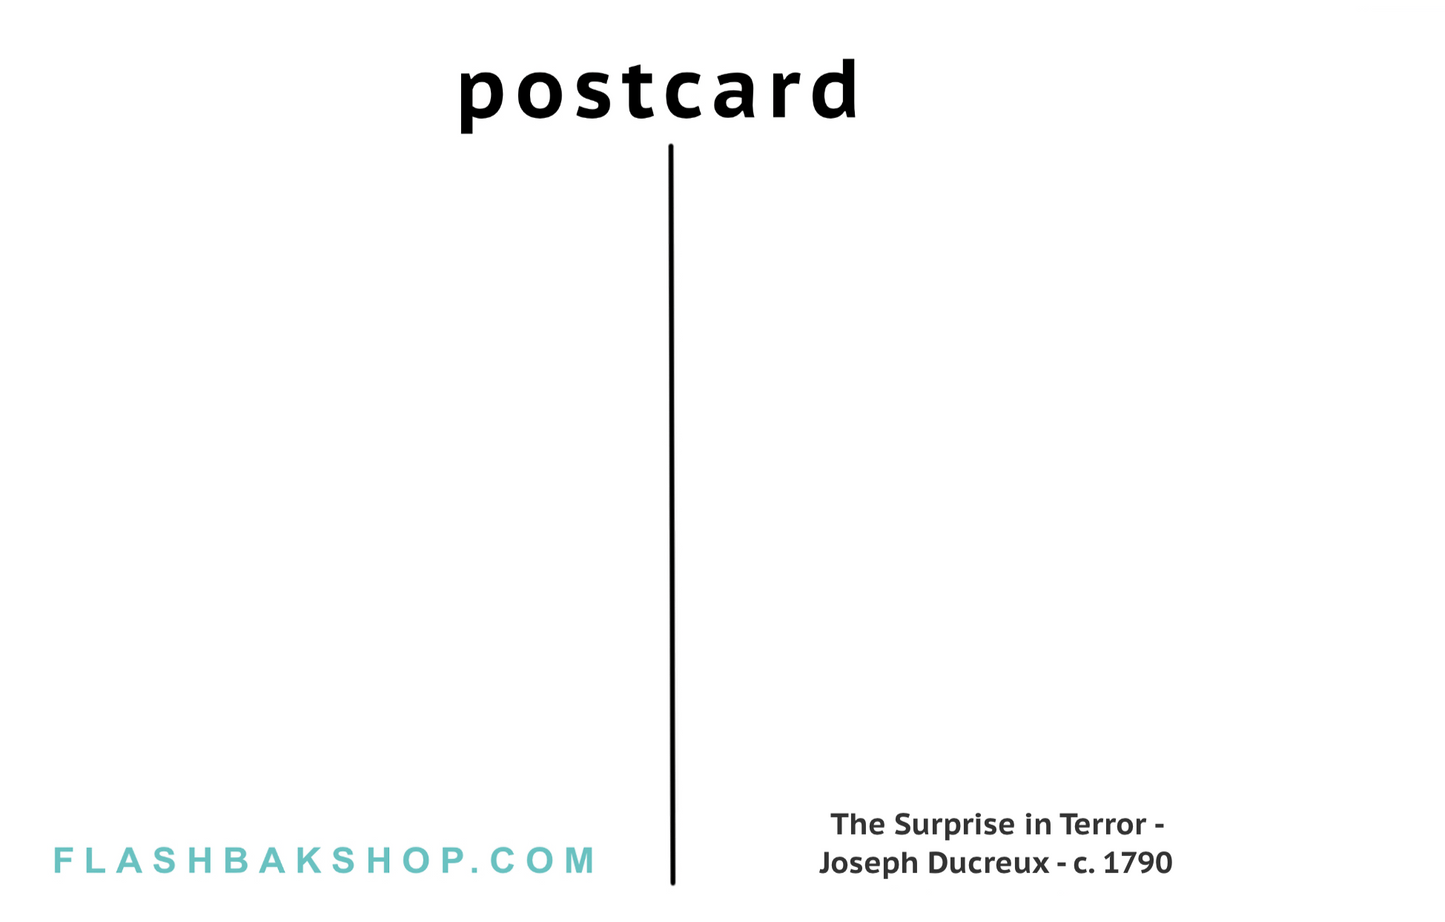 The Surprise in Terror by Joseph Ducreux, c. 1790 - Postcard